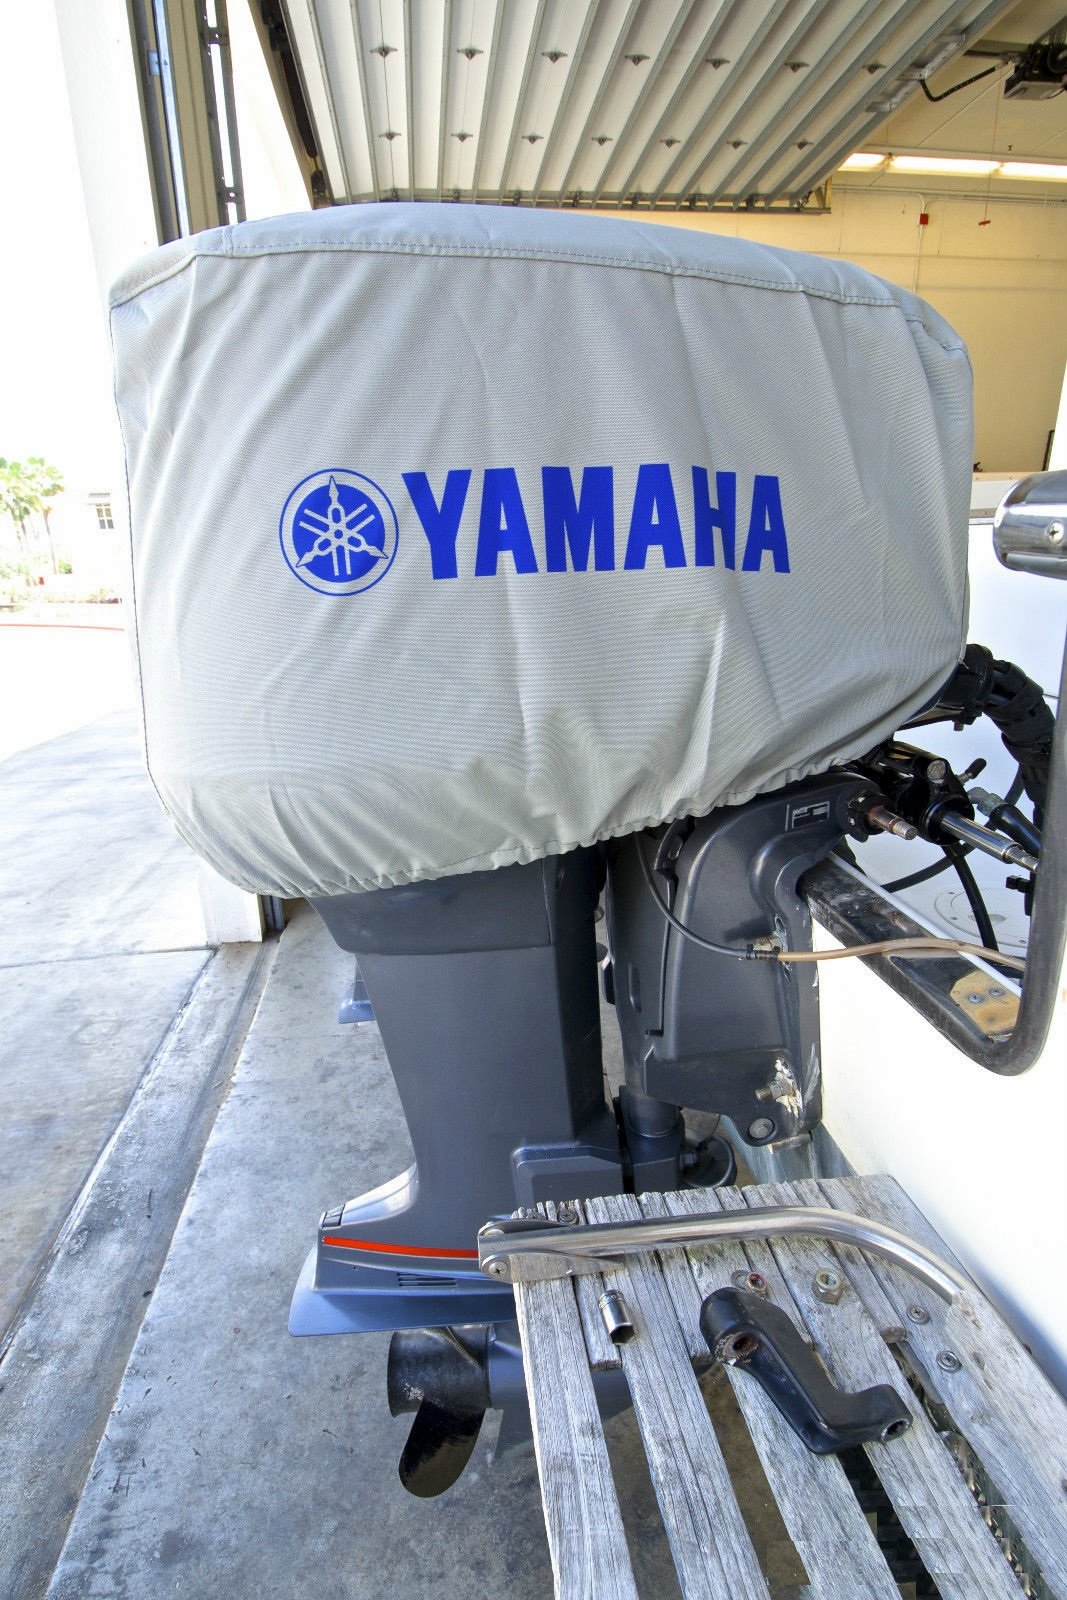 Yamaha - Mtr cvr 115